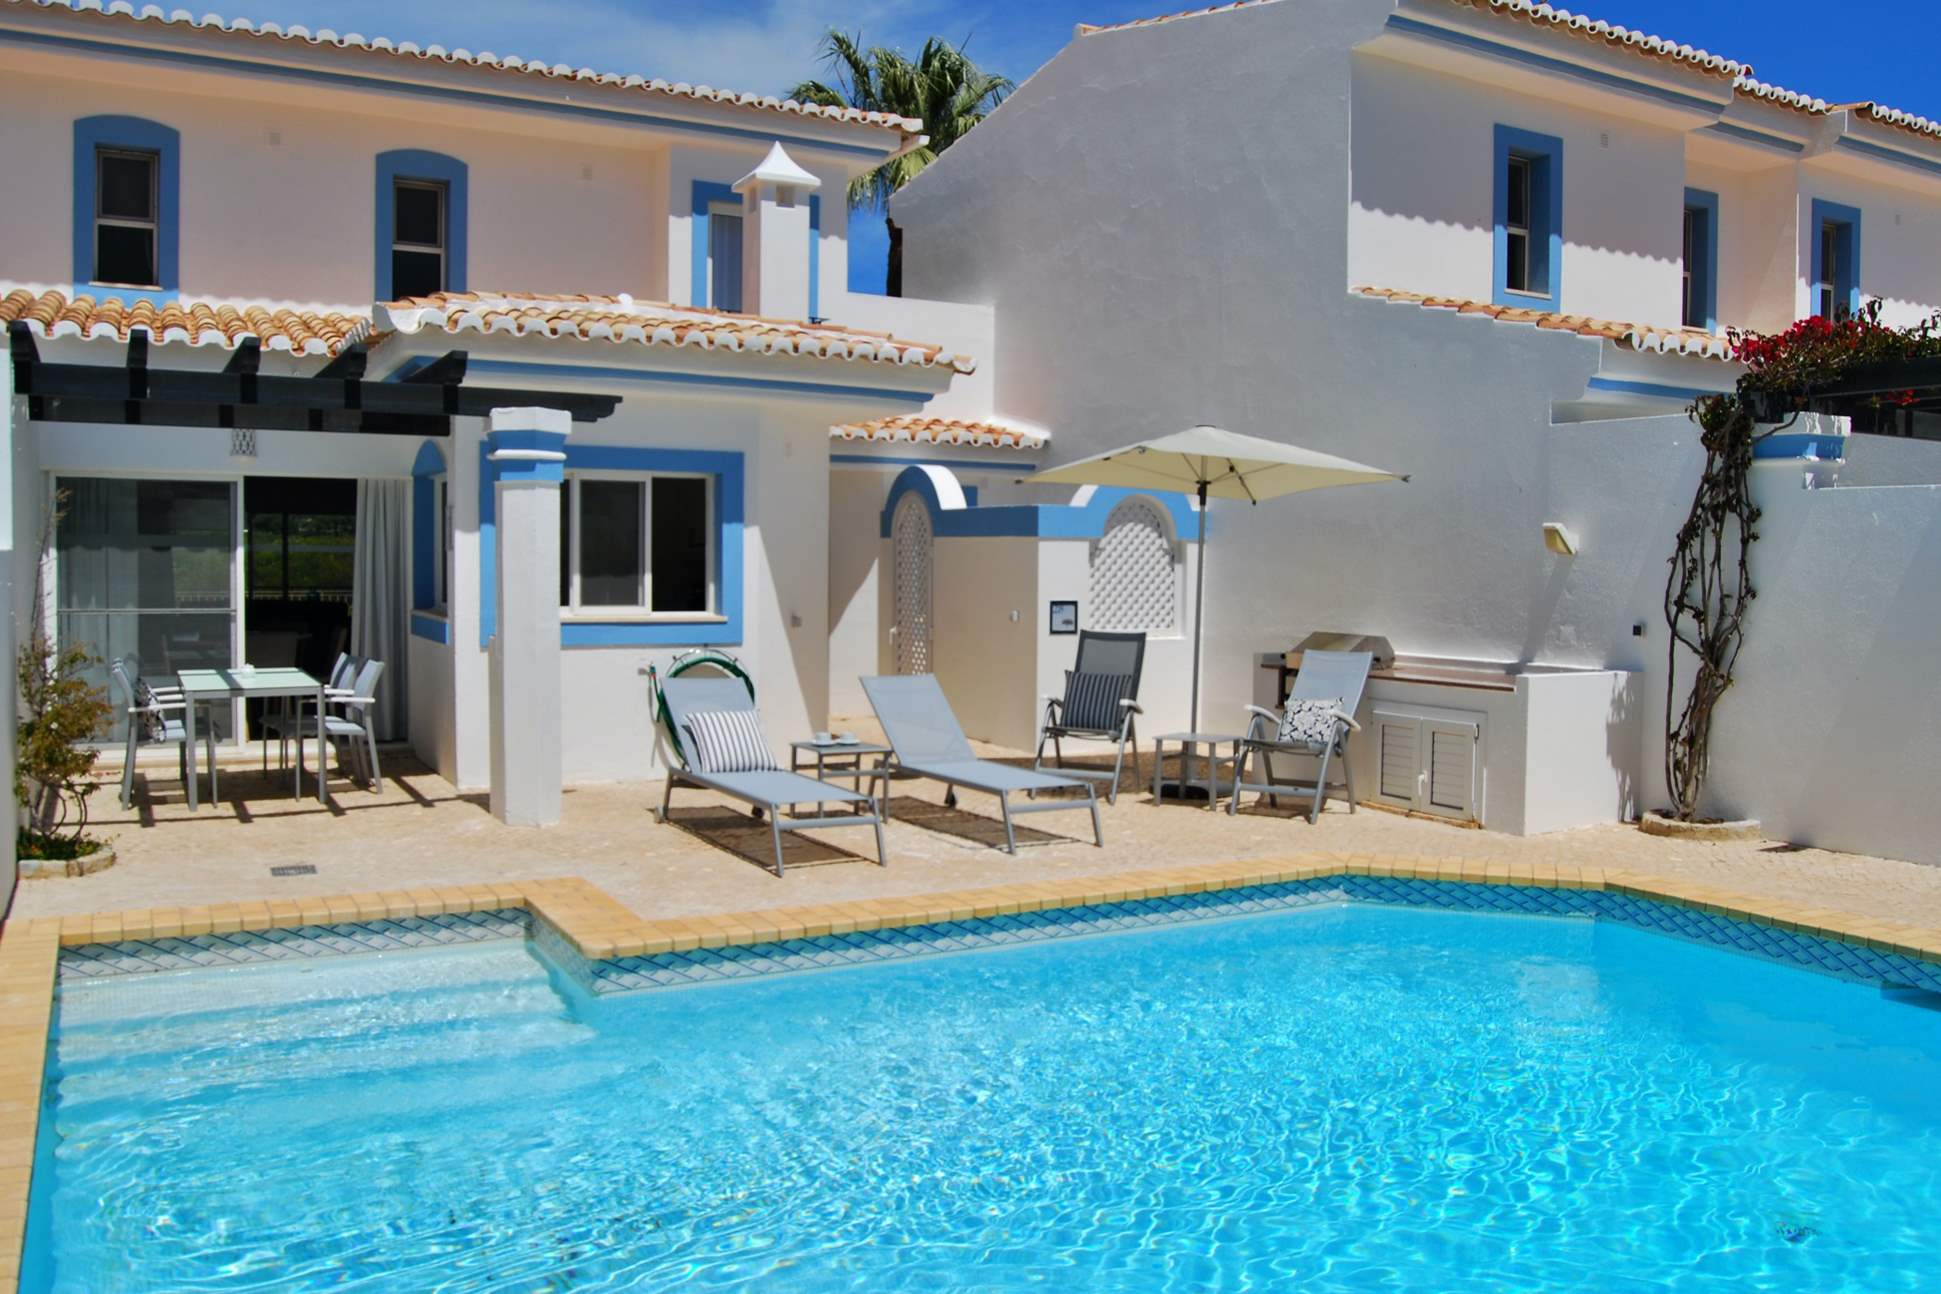 Four Seasons Fairways 2 Bed Cluster Villa, Saturday Arrival, 2 bedroom villa in Four Seasons Fairways, Algarve